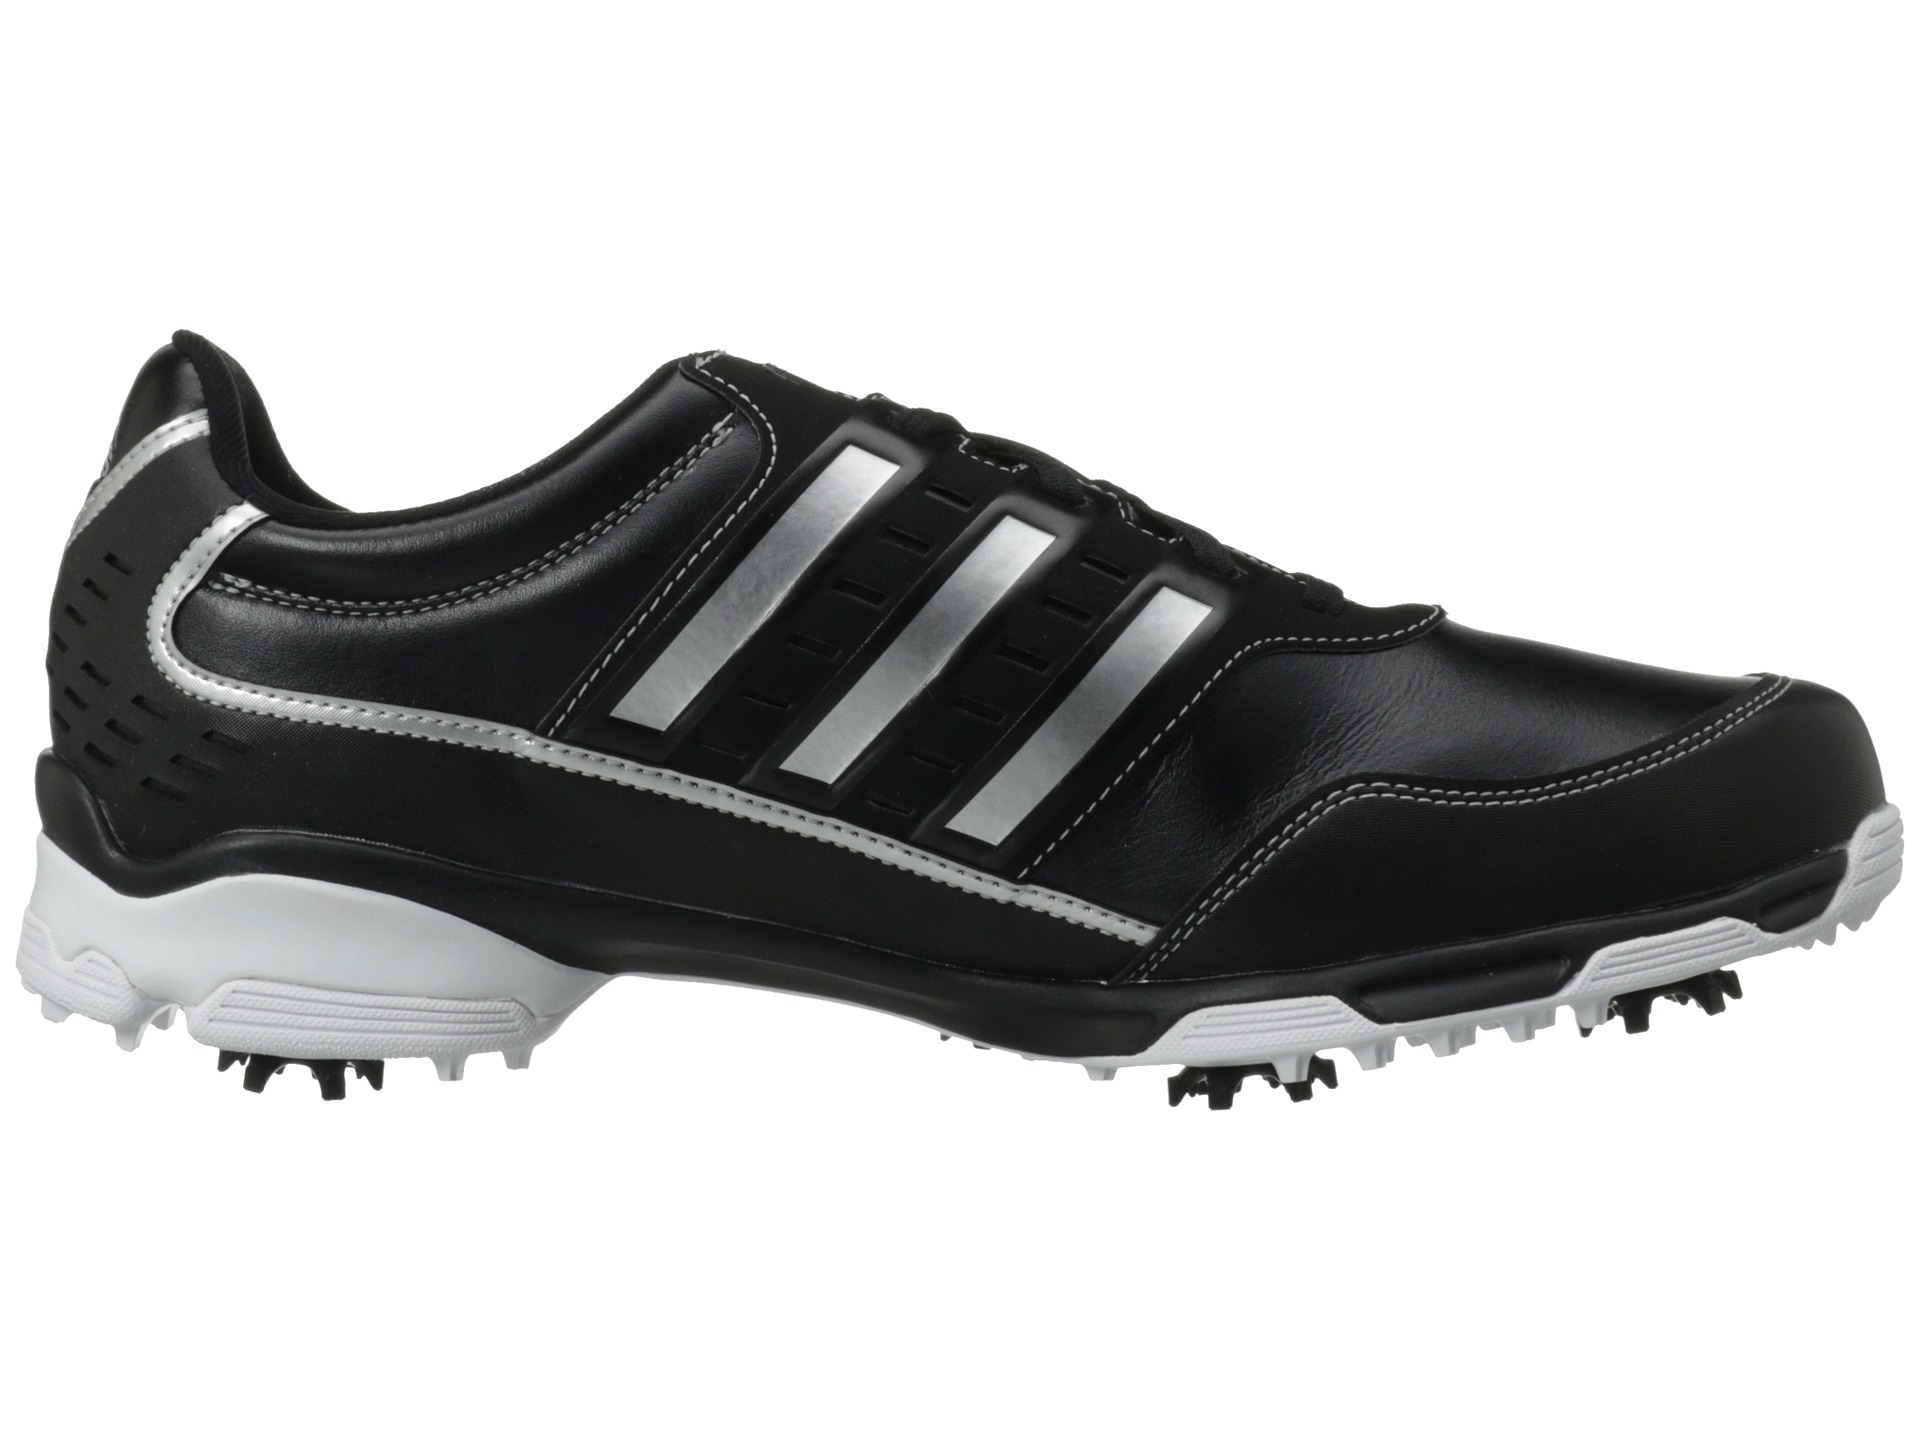 Adidas Golf Golflite Traxion Black Black Dark Metallic Silver